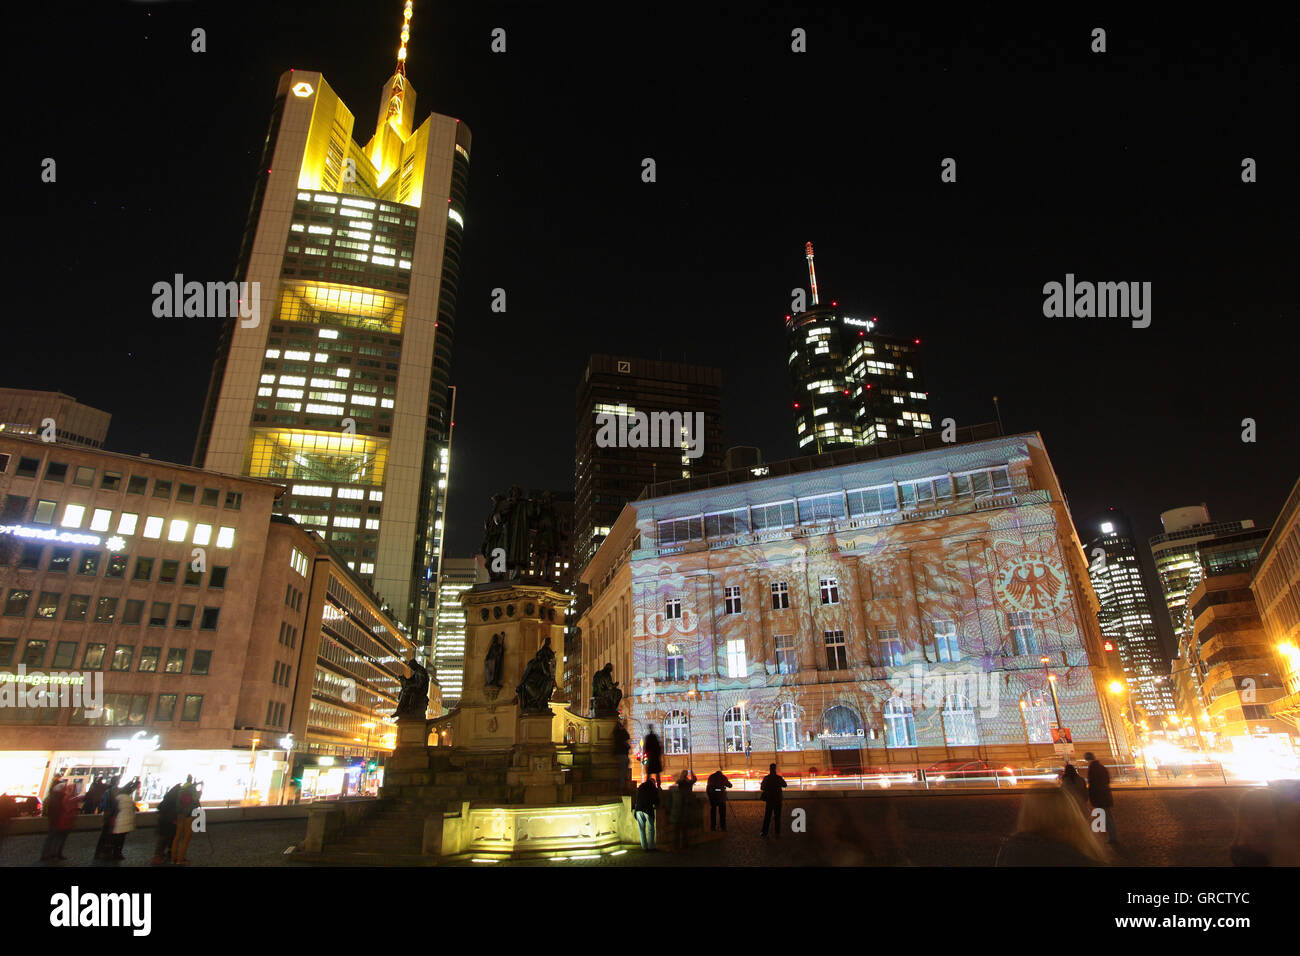 Illuminated Fassade Of Deutsche Bank With Deutschmark Bill During Luminale 2016 In Frankfurt Stock Photo